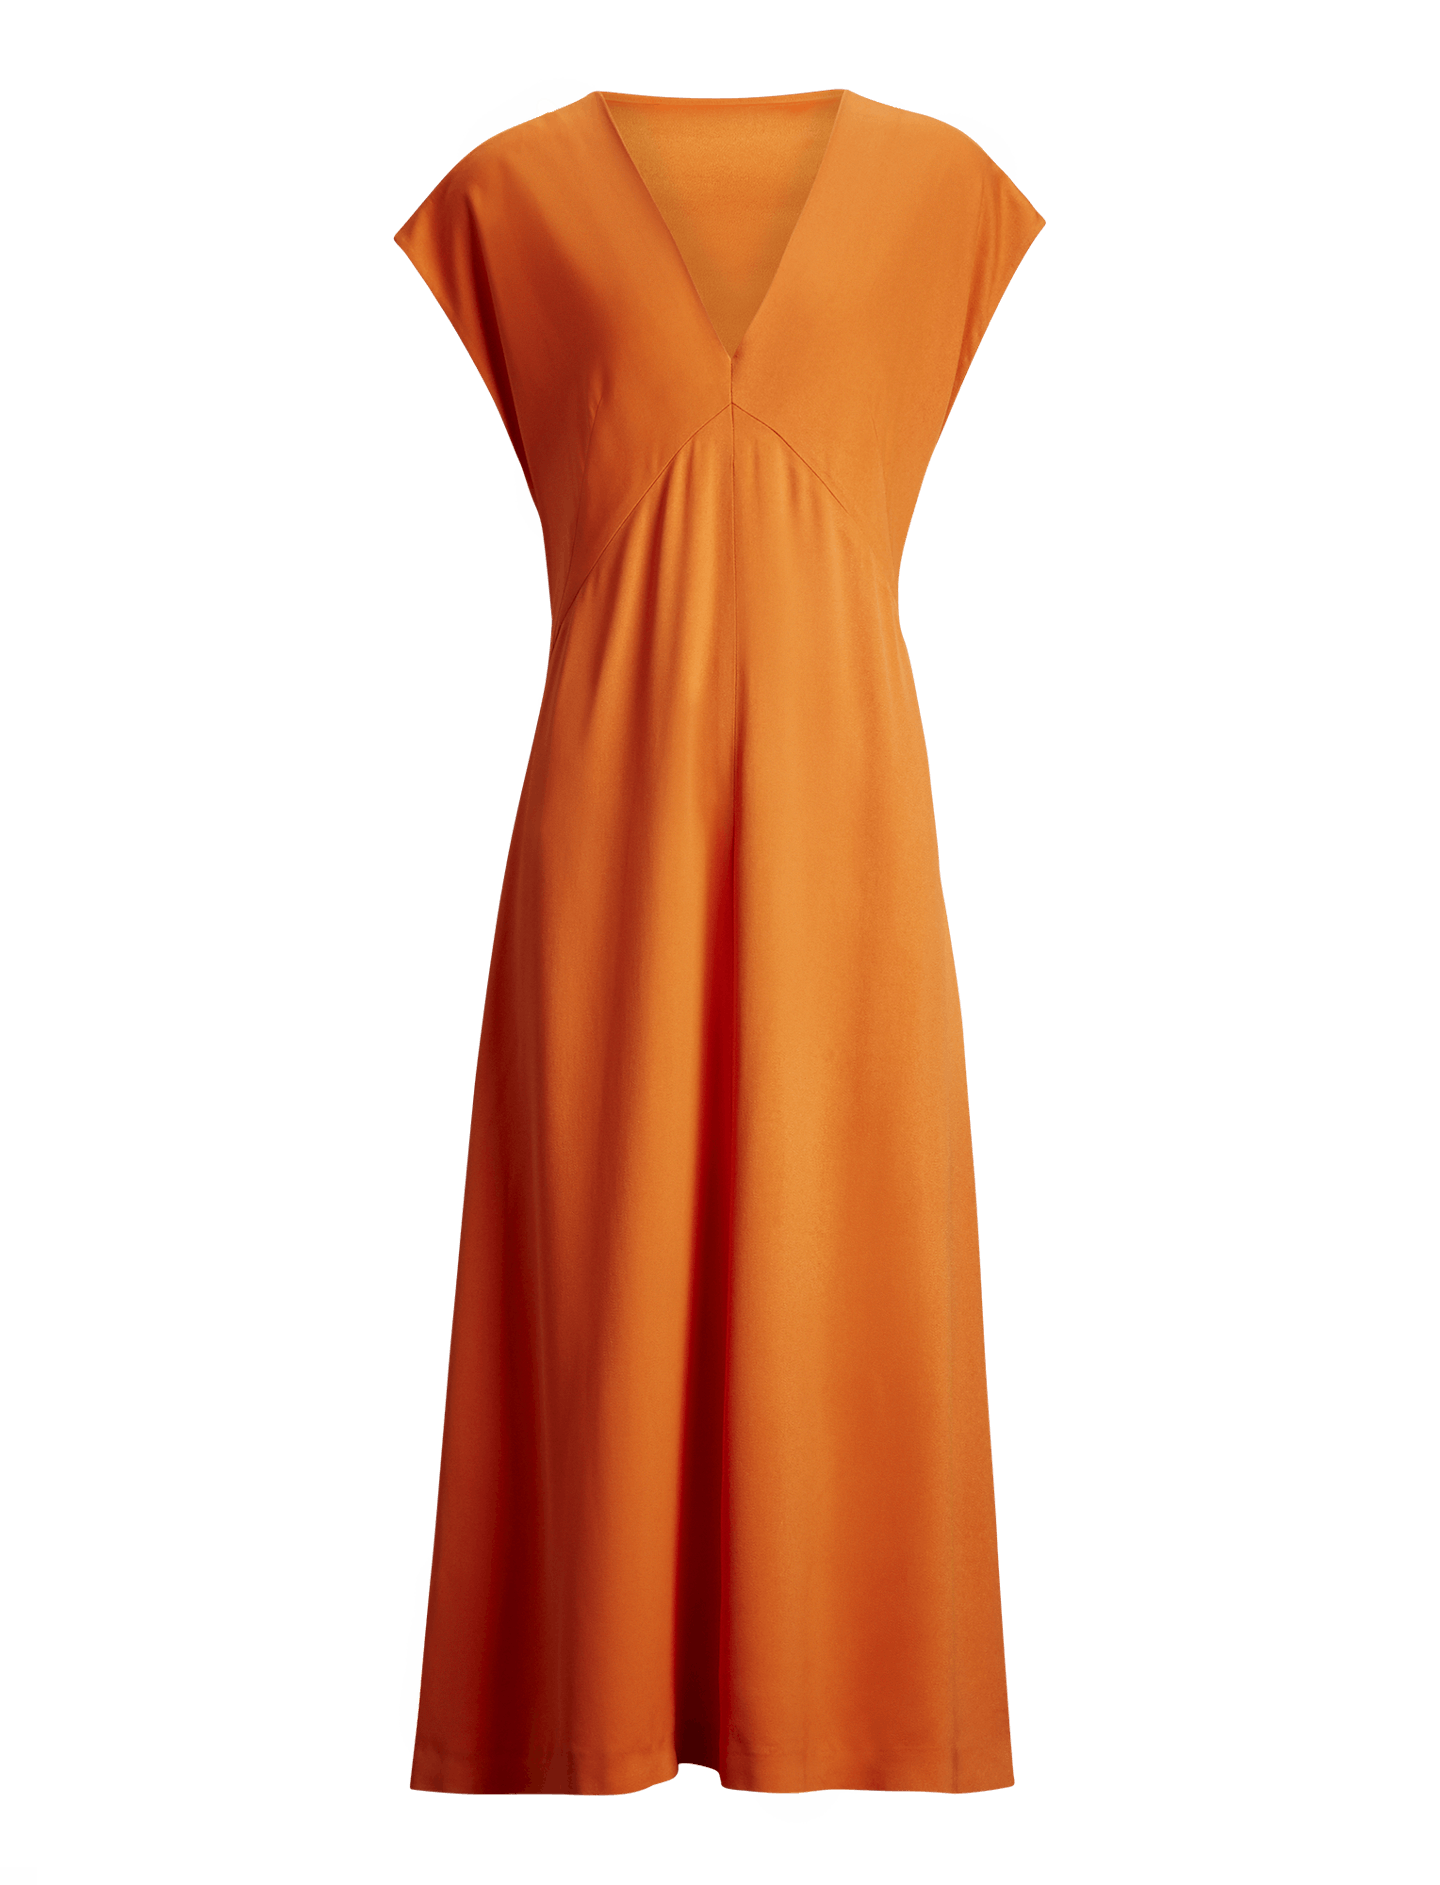 Joseph orange dress